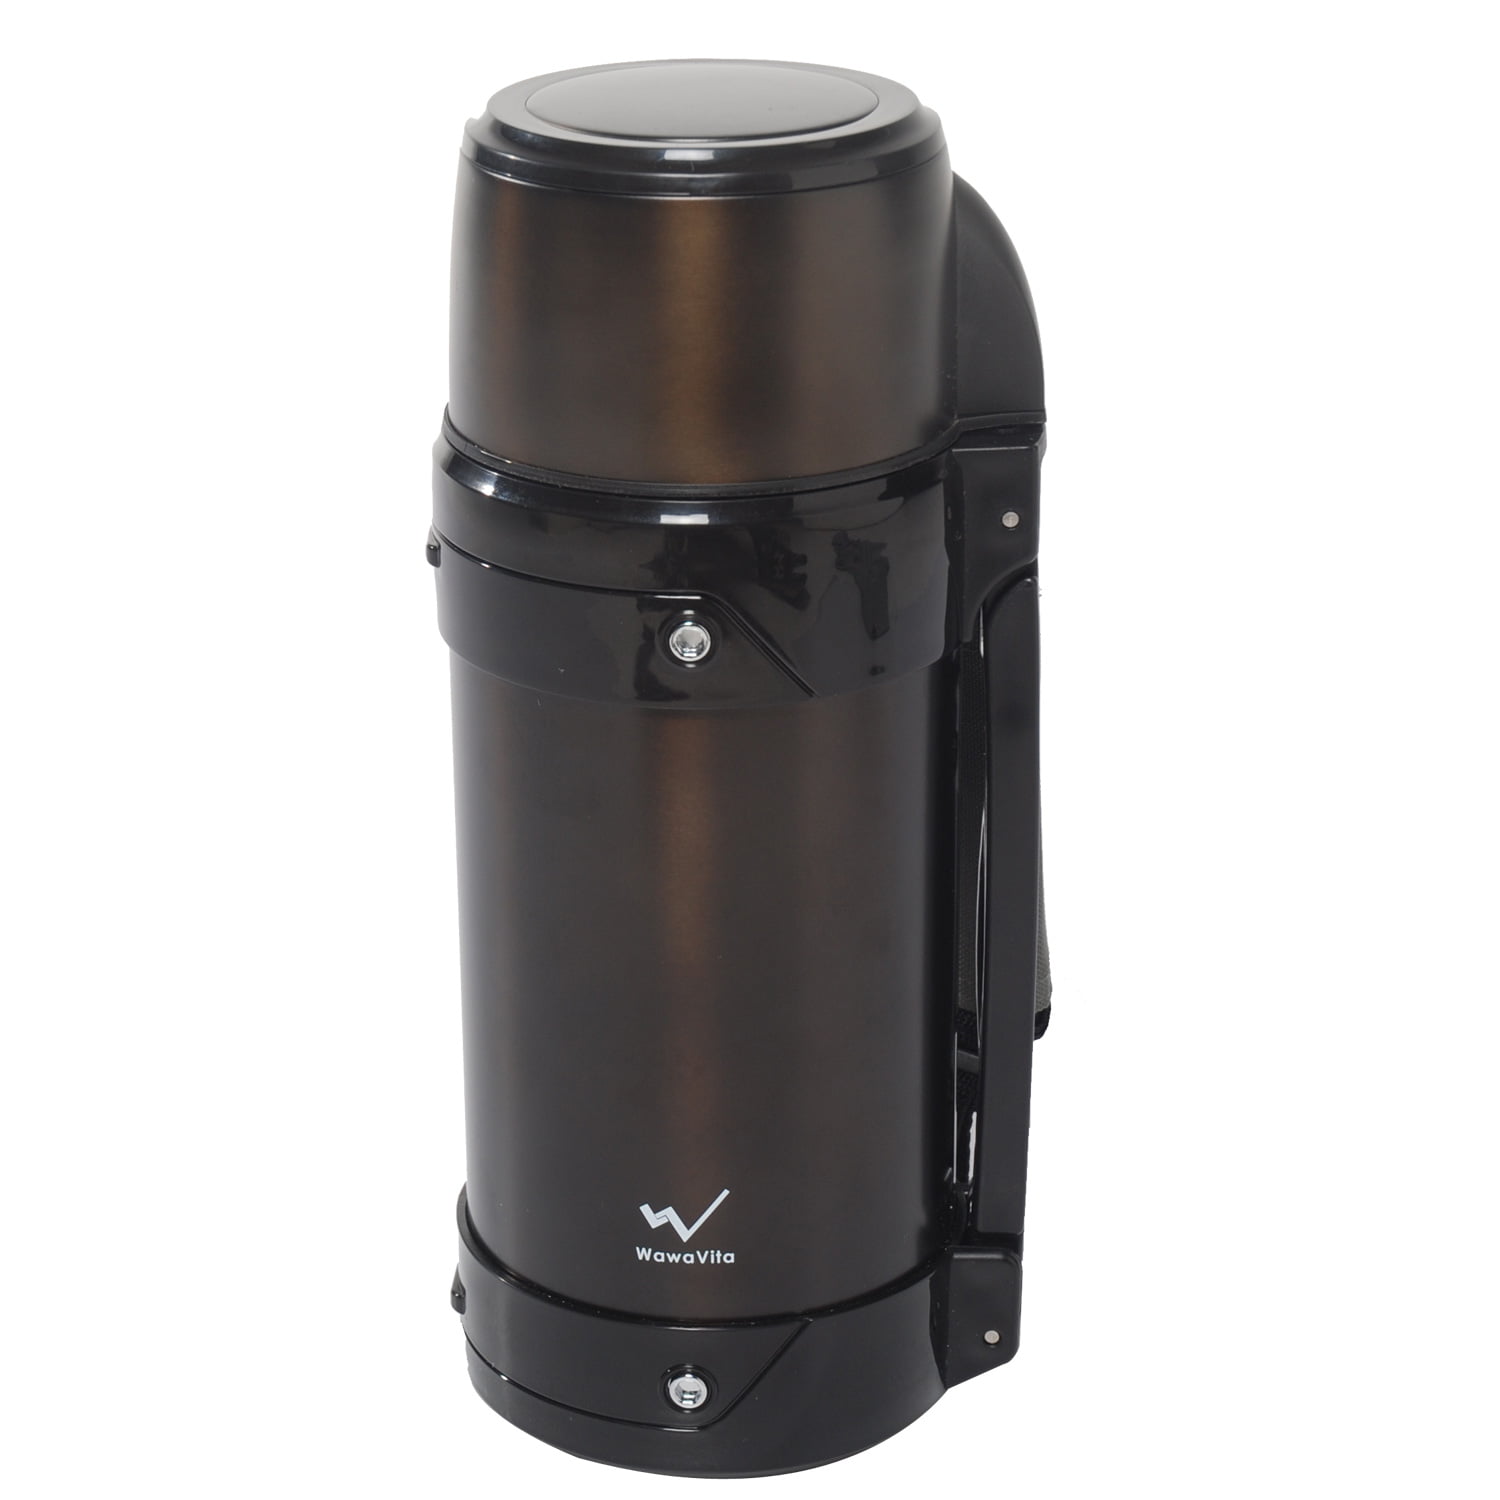 Wawa 12oz Vacuum Insulated Coffee Mug